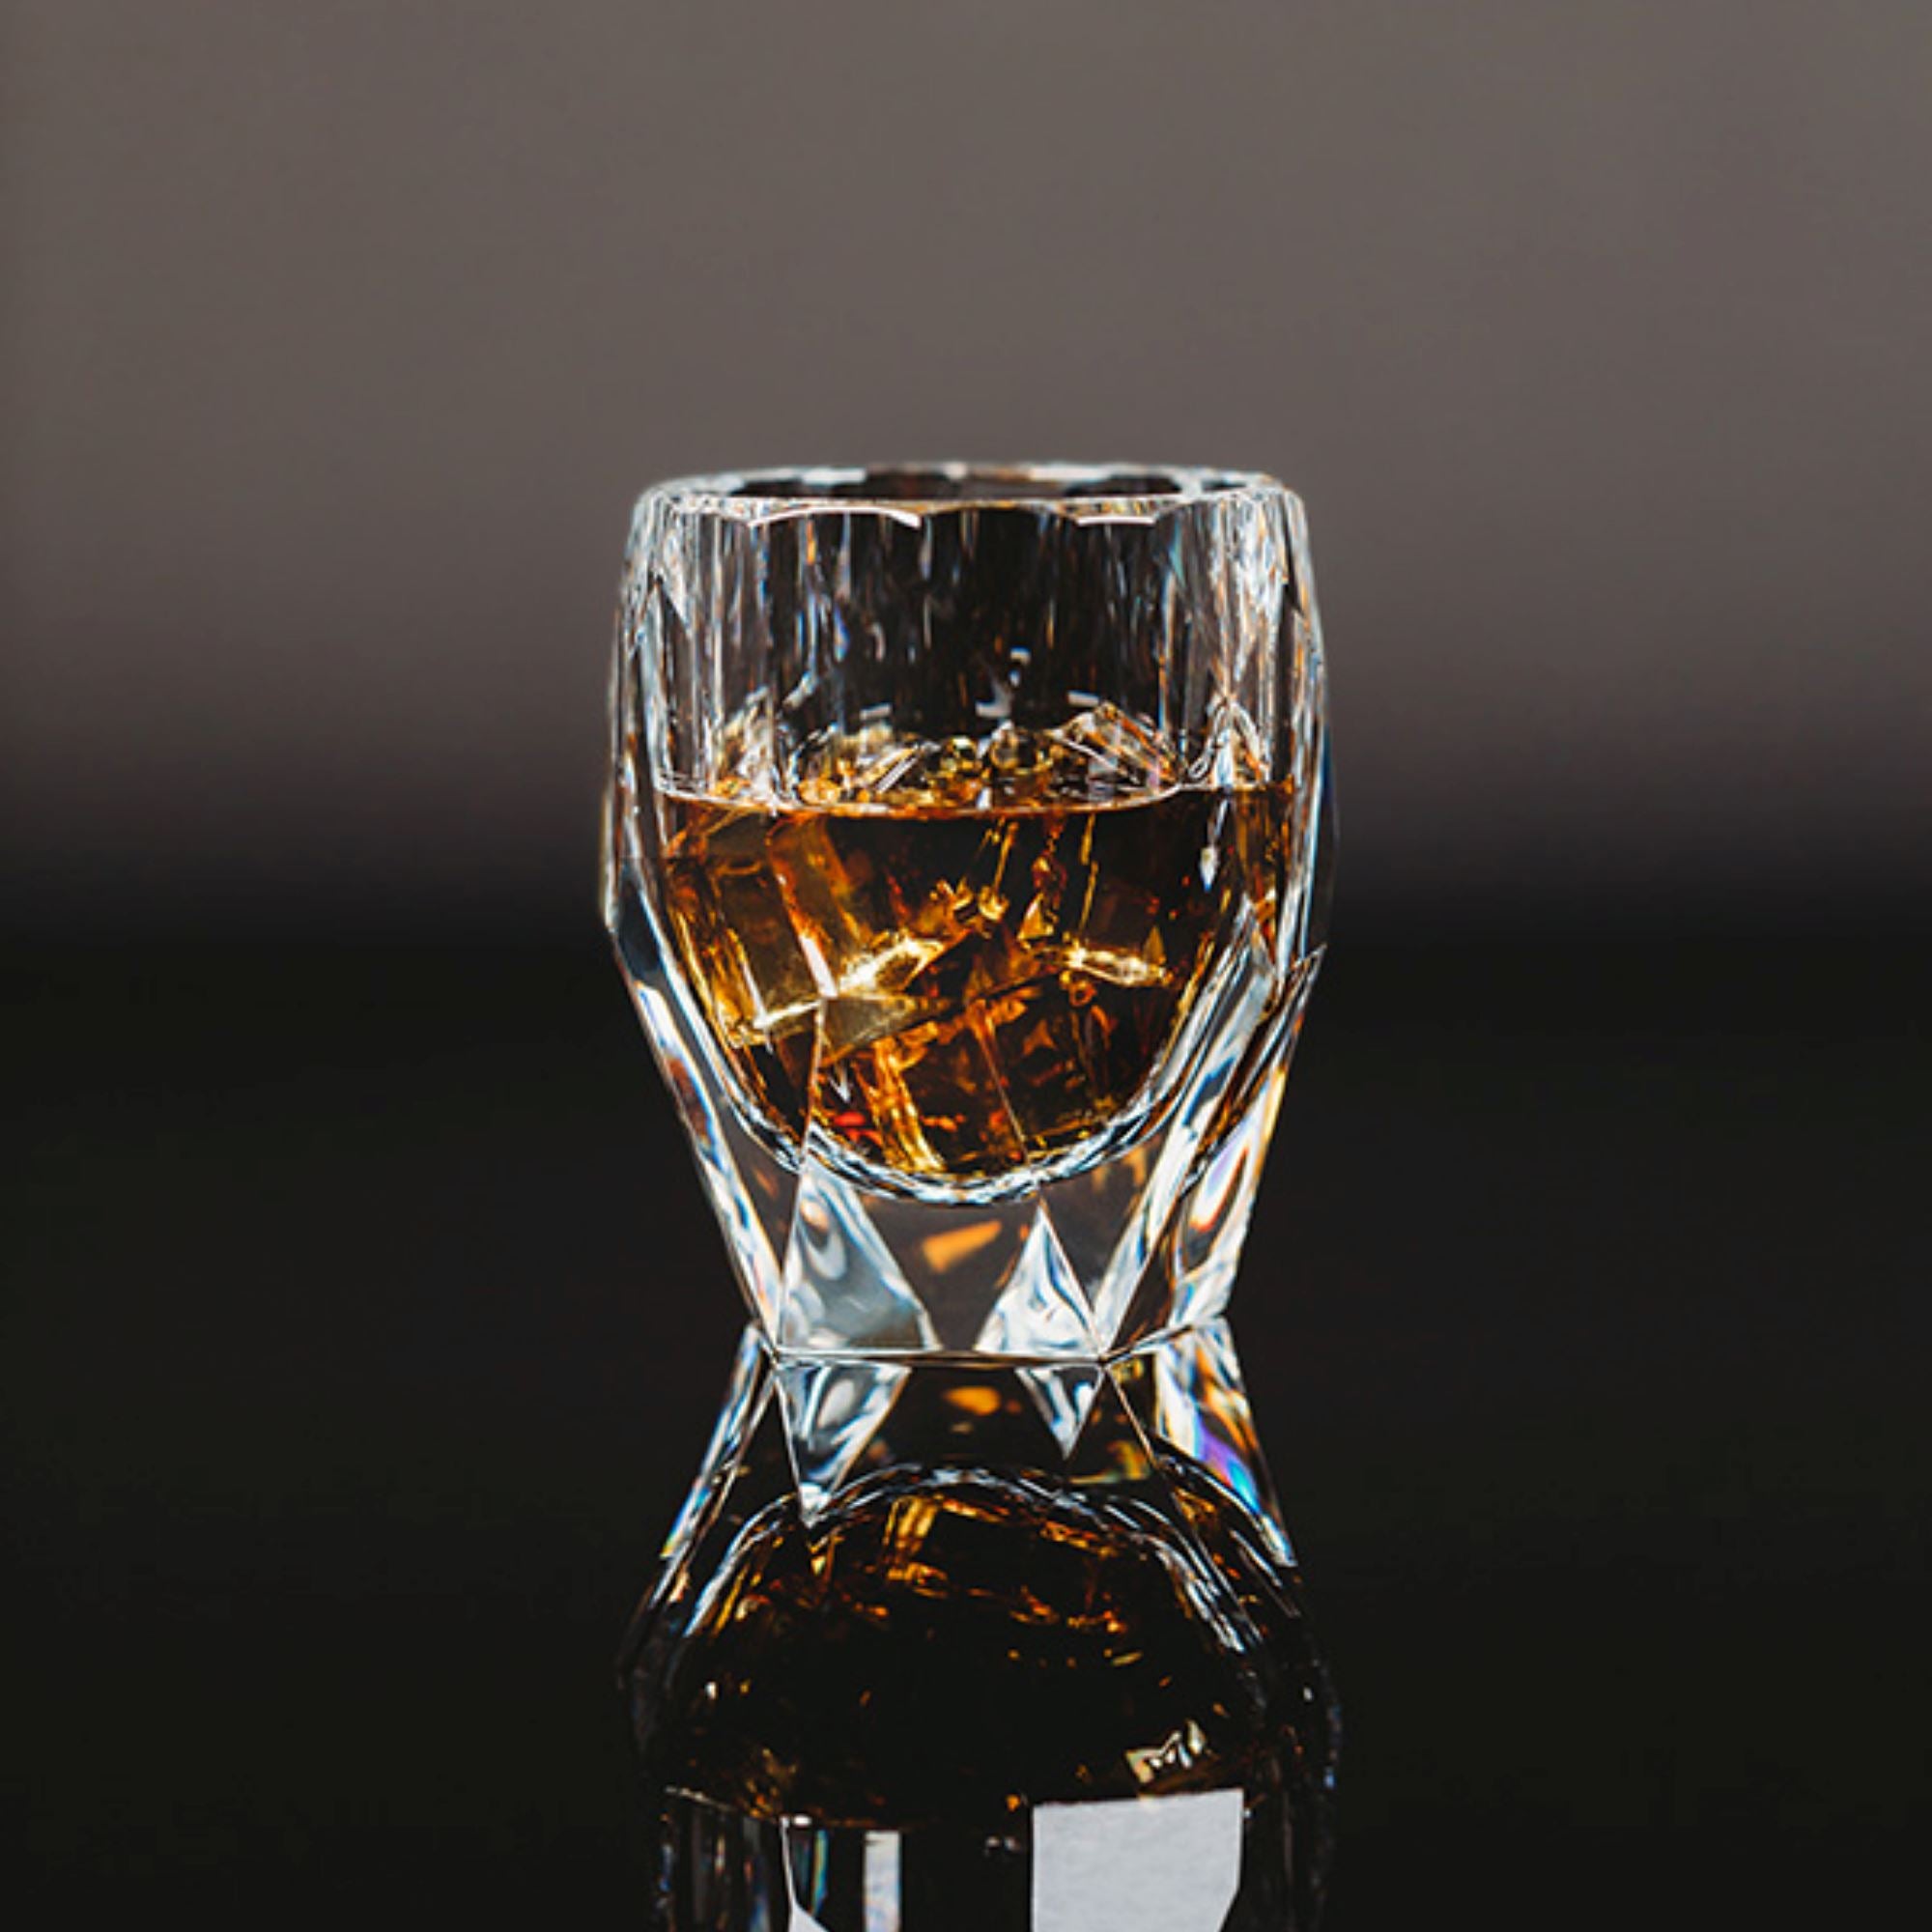 Unbreakable Heavy Whisky Rocks Glass 210ml - Set of 4 Whiskey Glass D-STILL Drinkware 